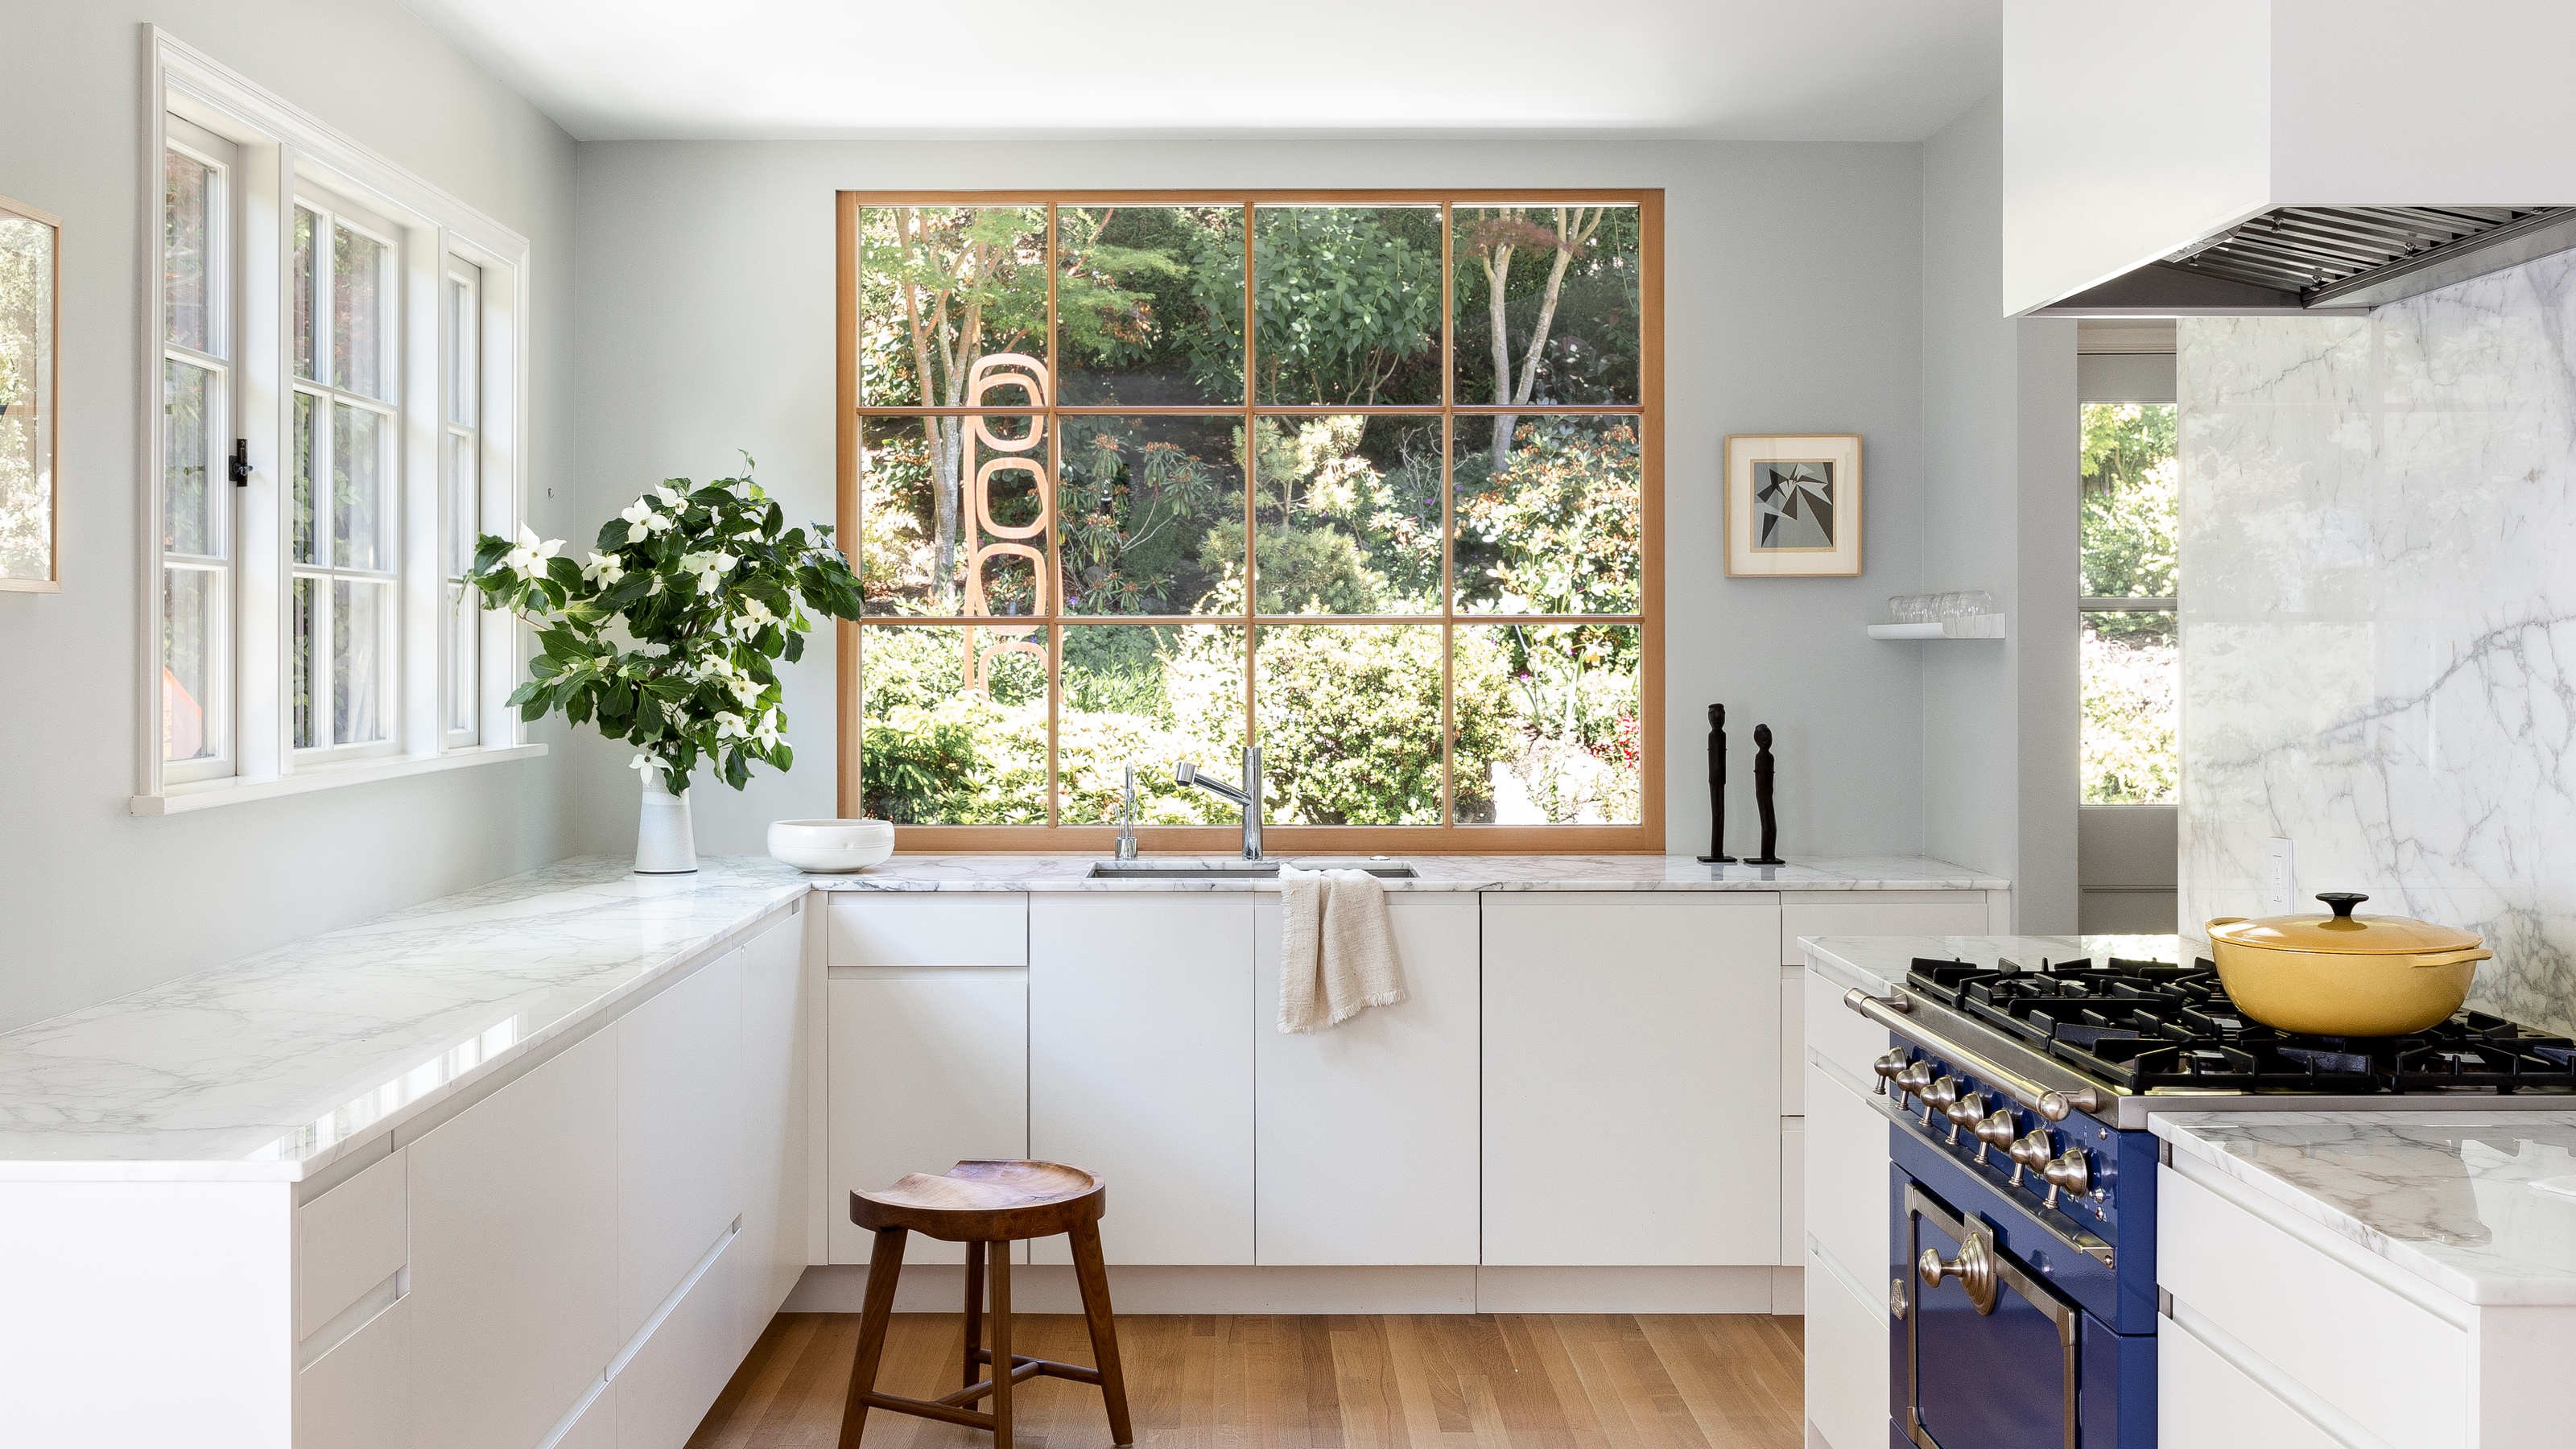 Small white kitchen ideas 20 design tips for light kitchens ...